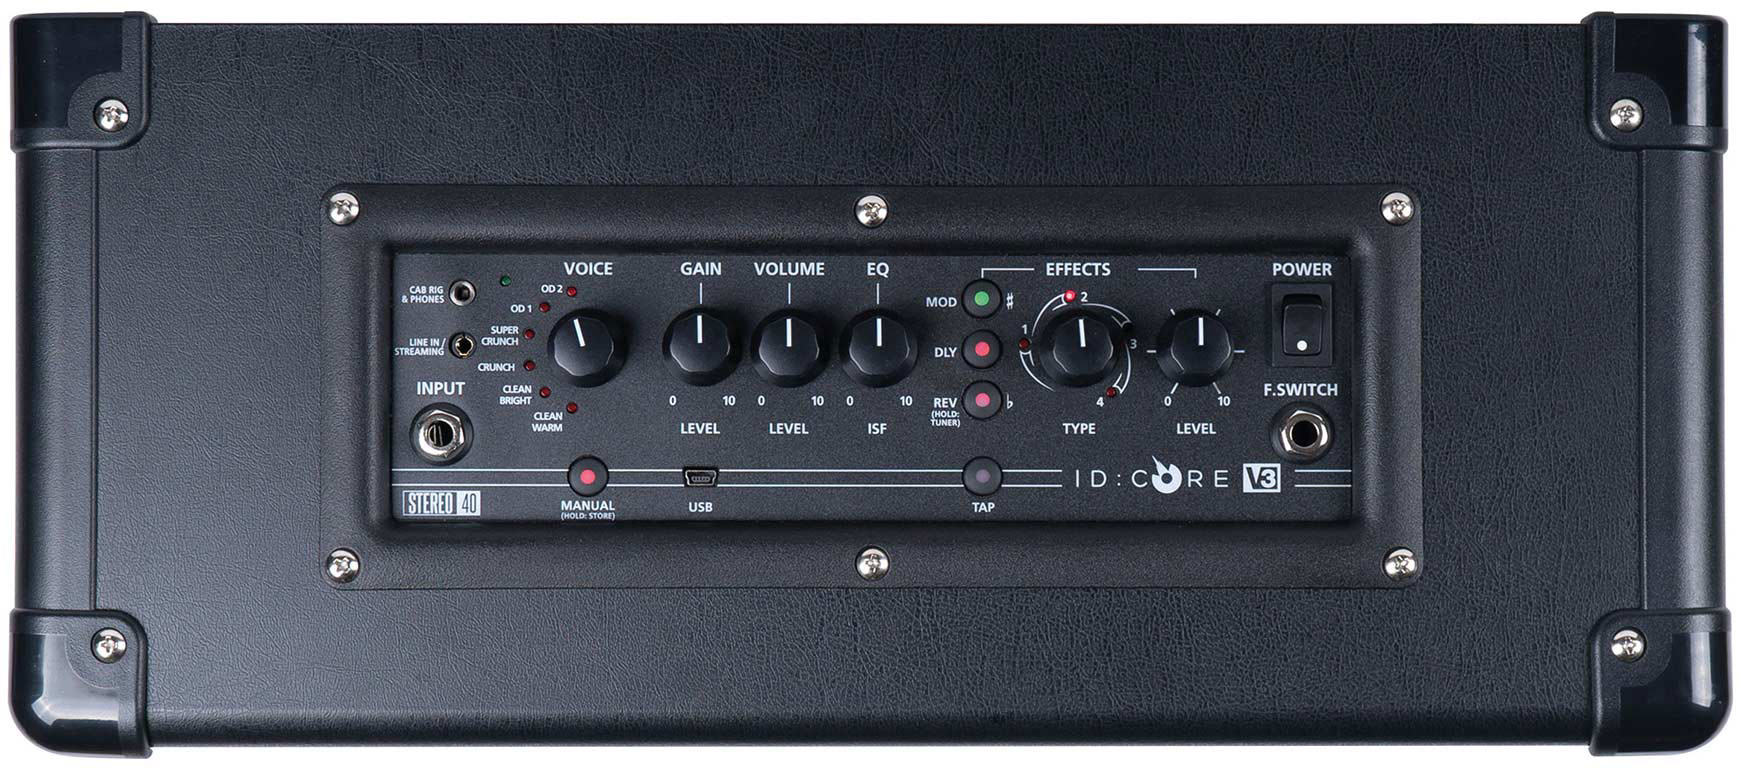 Blackstar Id:core V3 Stereo 40 2x20w 2x6.5 - Combo amplificador para guitarra eléctrica - Variation 2